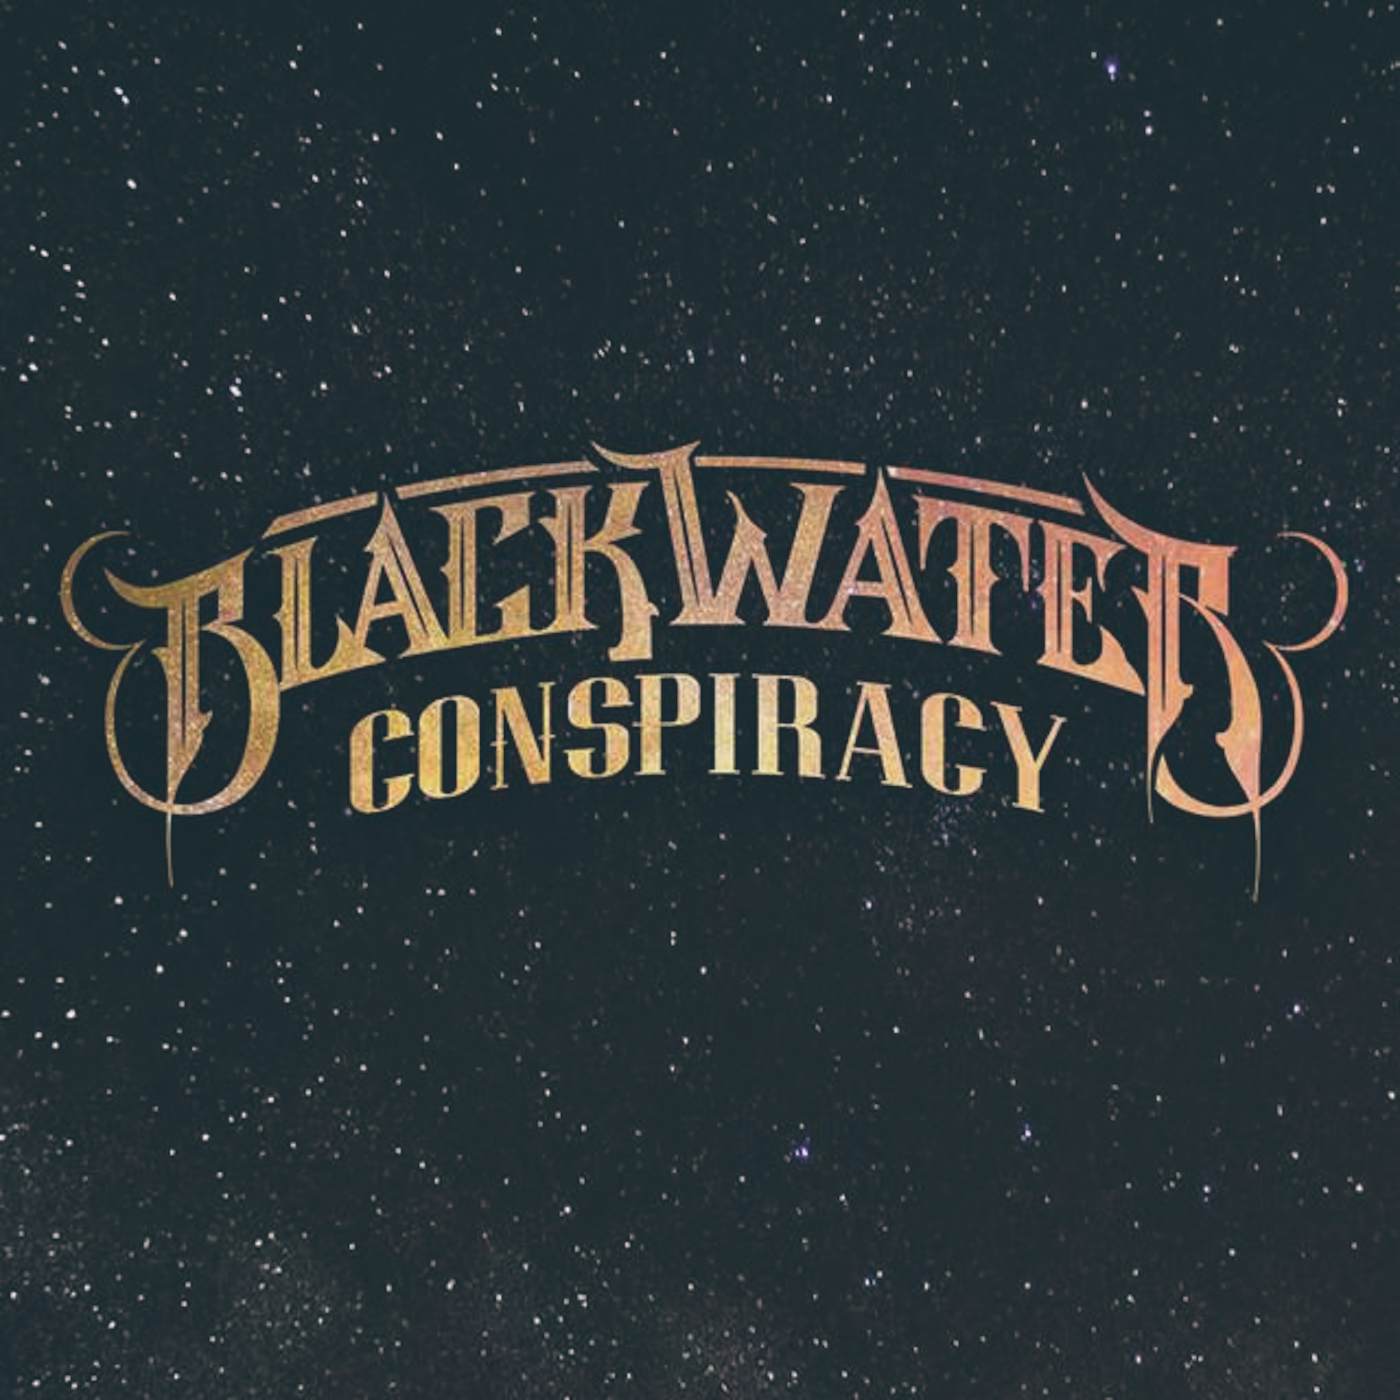 Blackwater Conspiracy